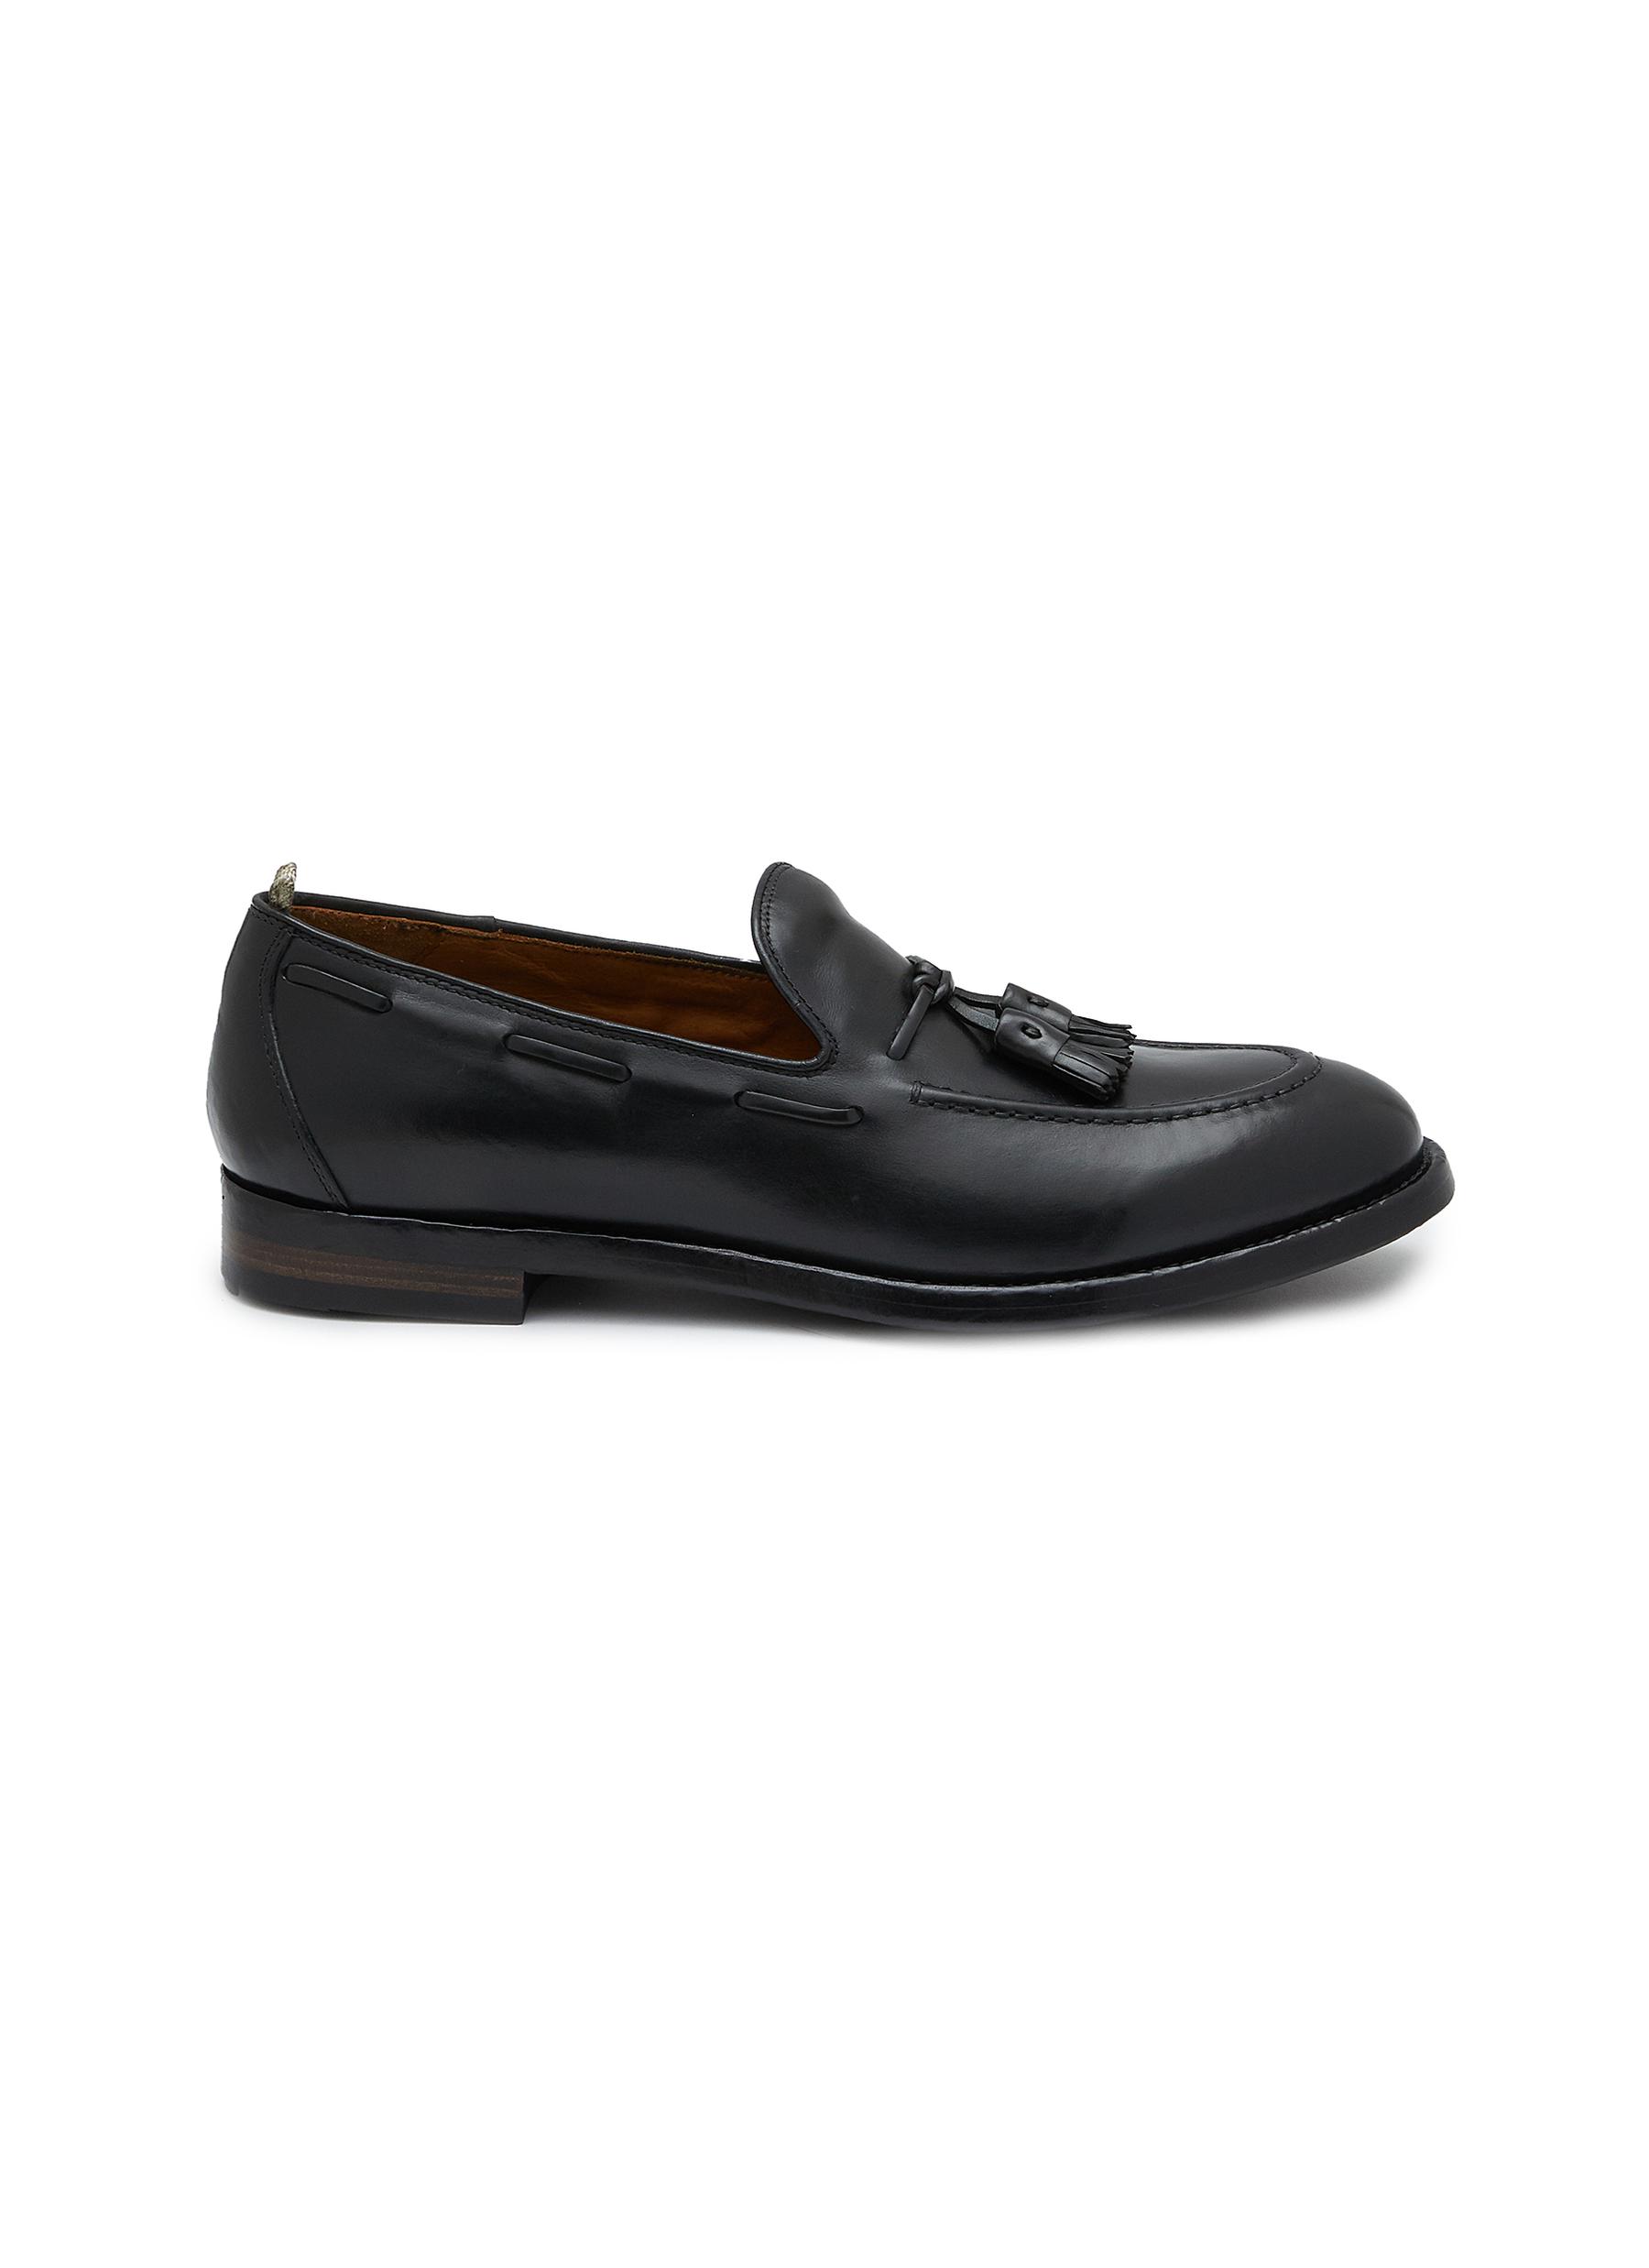 Tulane 001 Leather Tassel Loafers